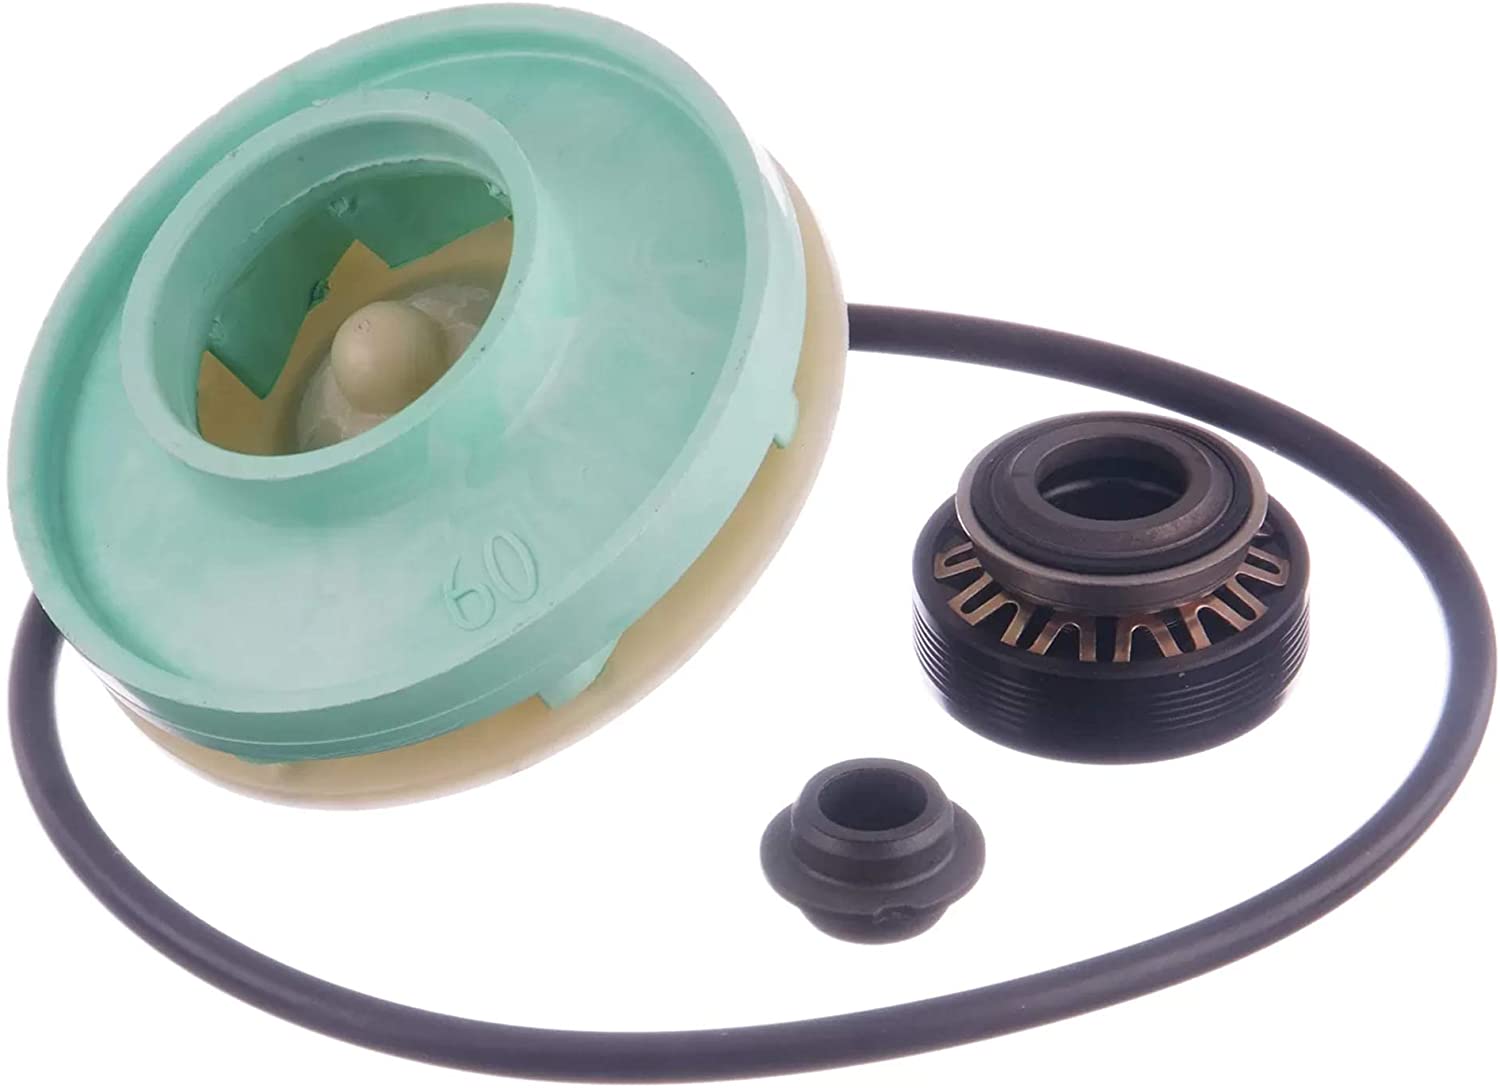 Bosch Dishwasher Pump Impeller And Seal Kit. Part #00167085